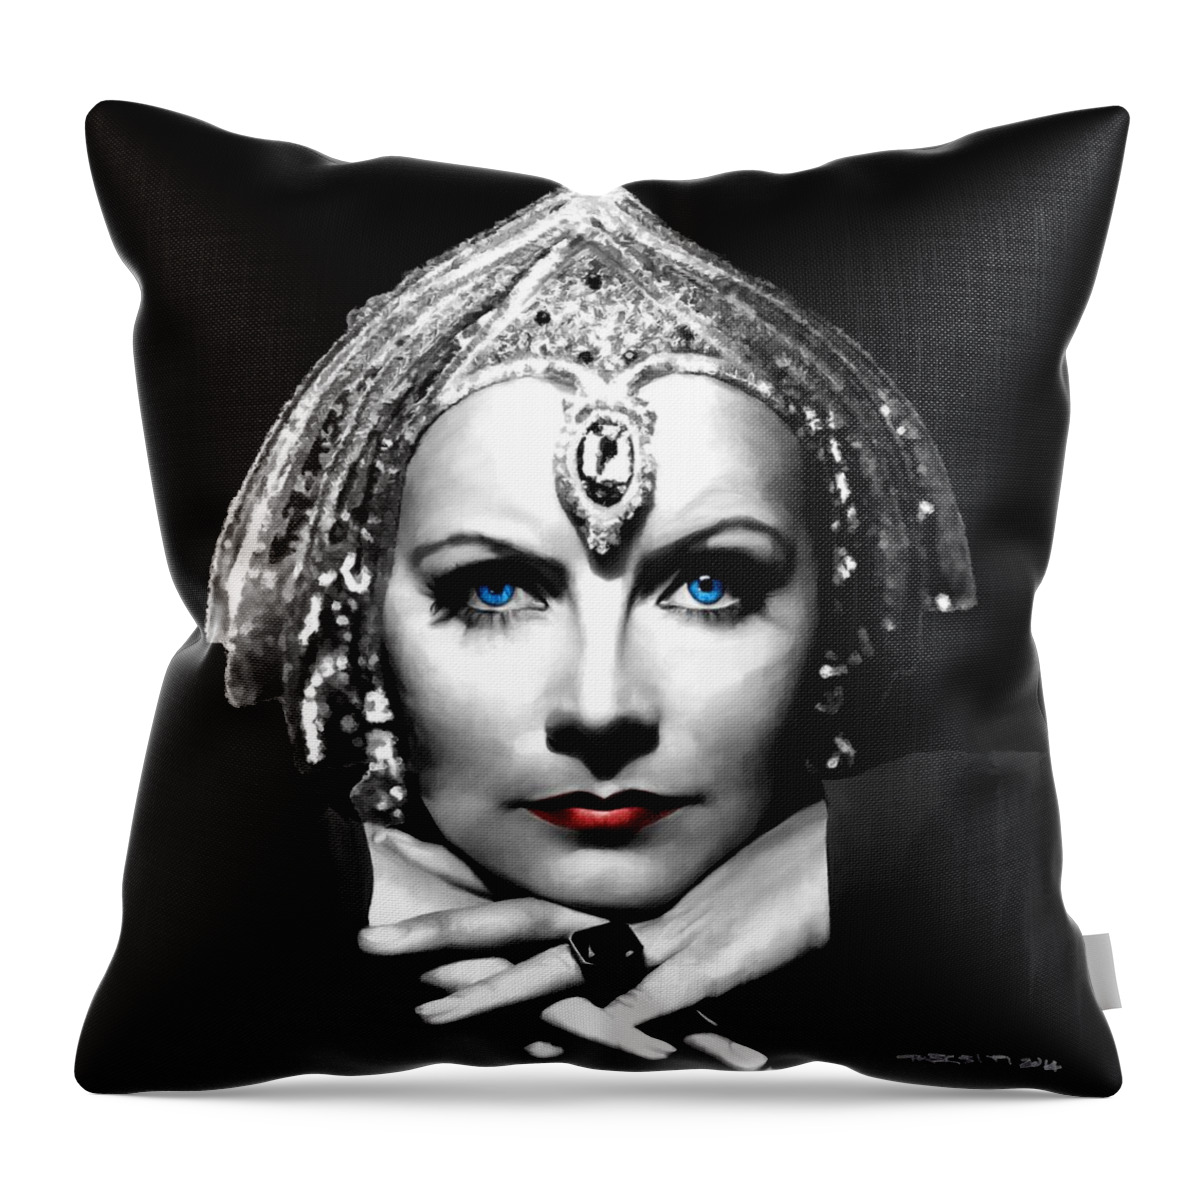 Greta Garbo Throw Pillow featuring the digital art Greta Garbo Portrait by Gabriel T Toro